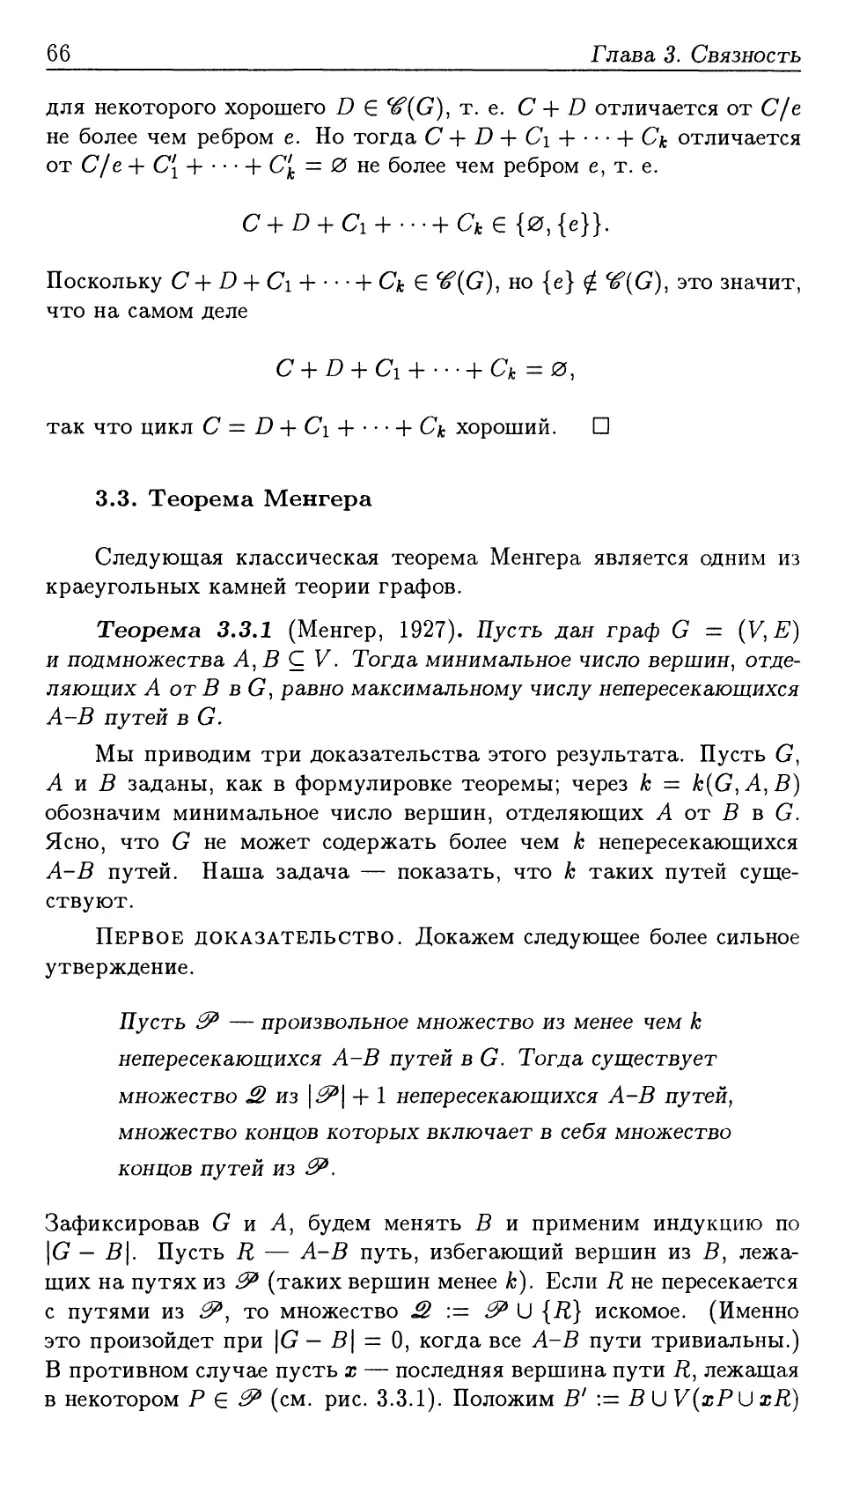 3.3. Теорема Менгера